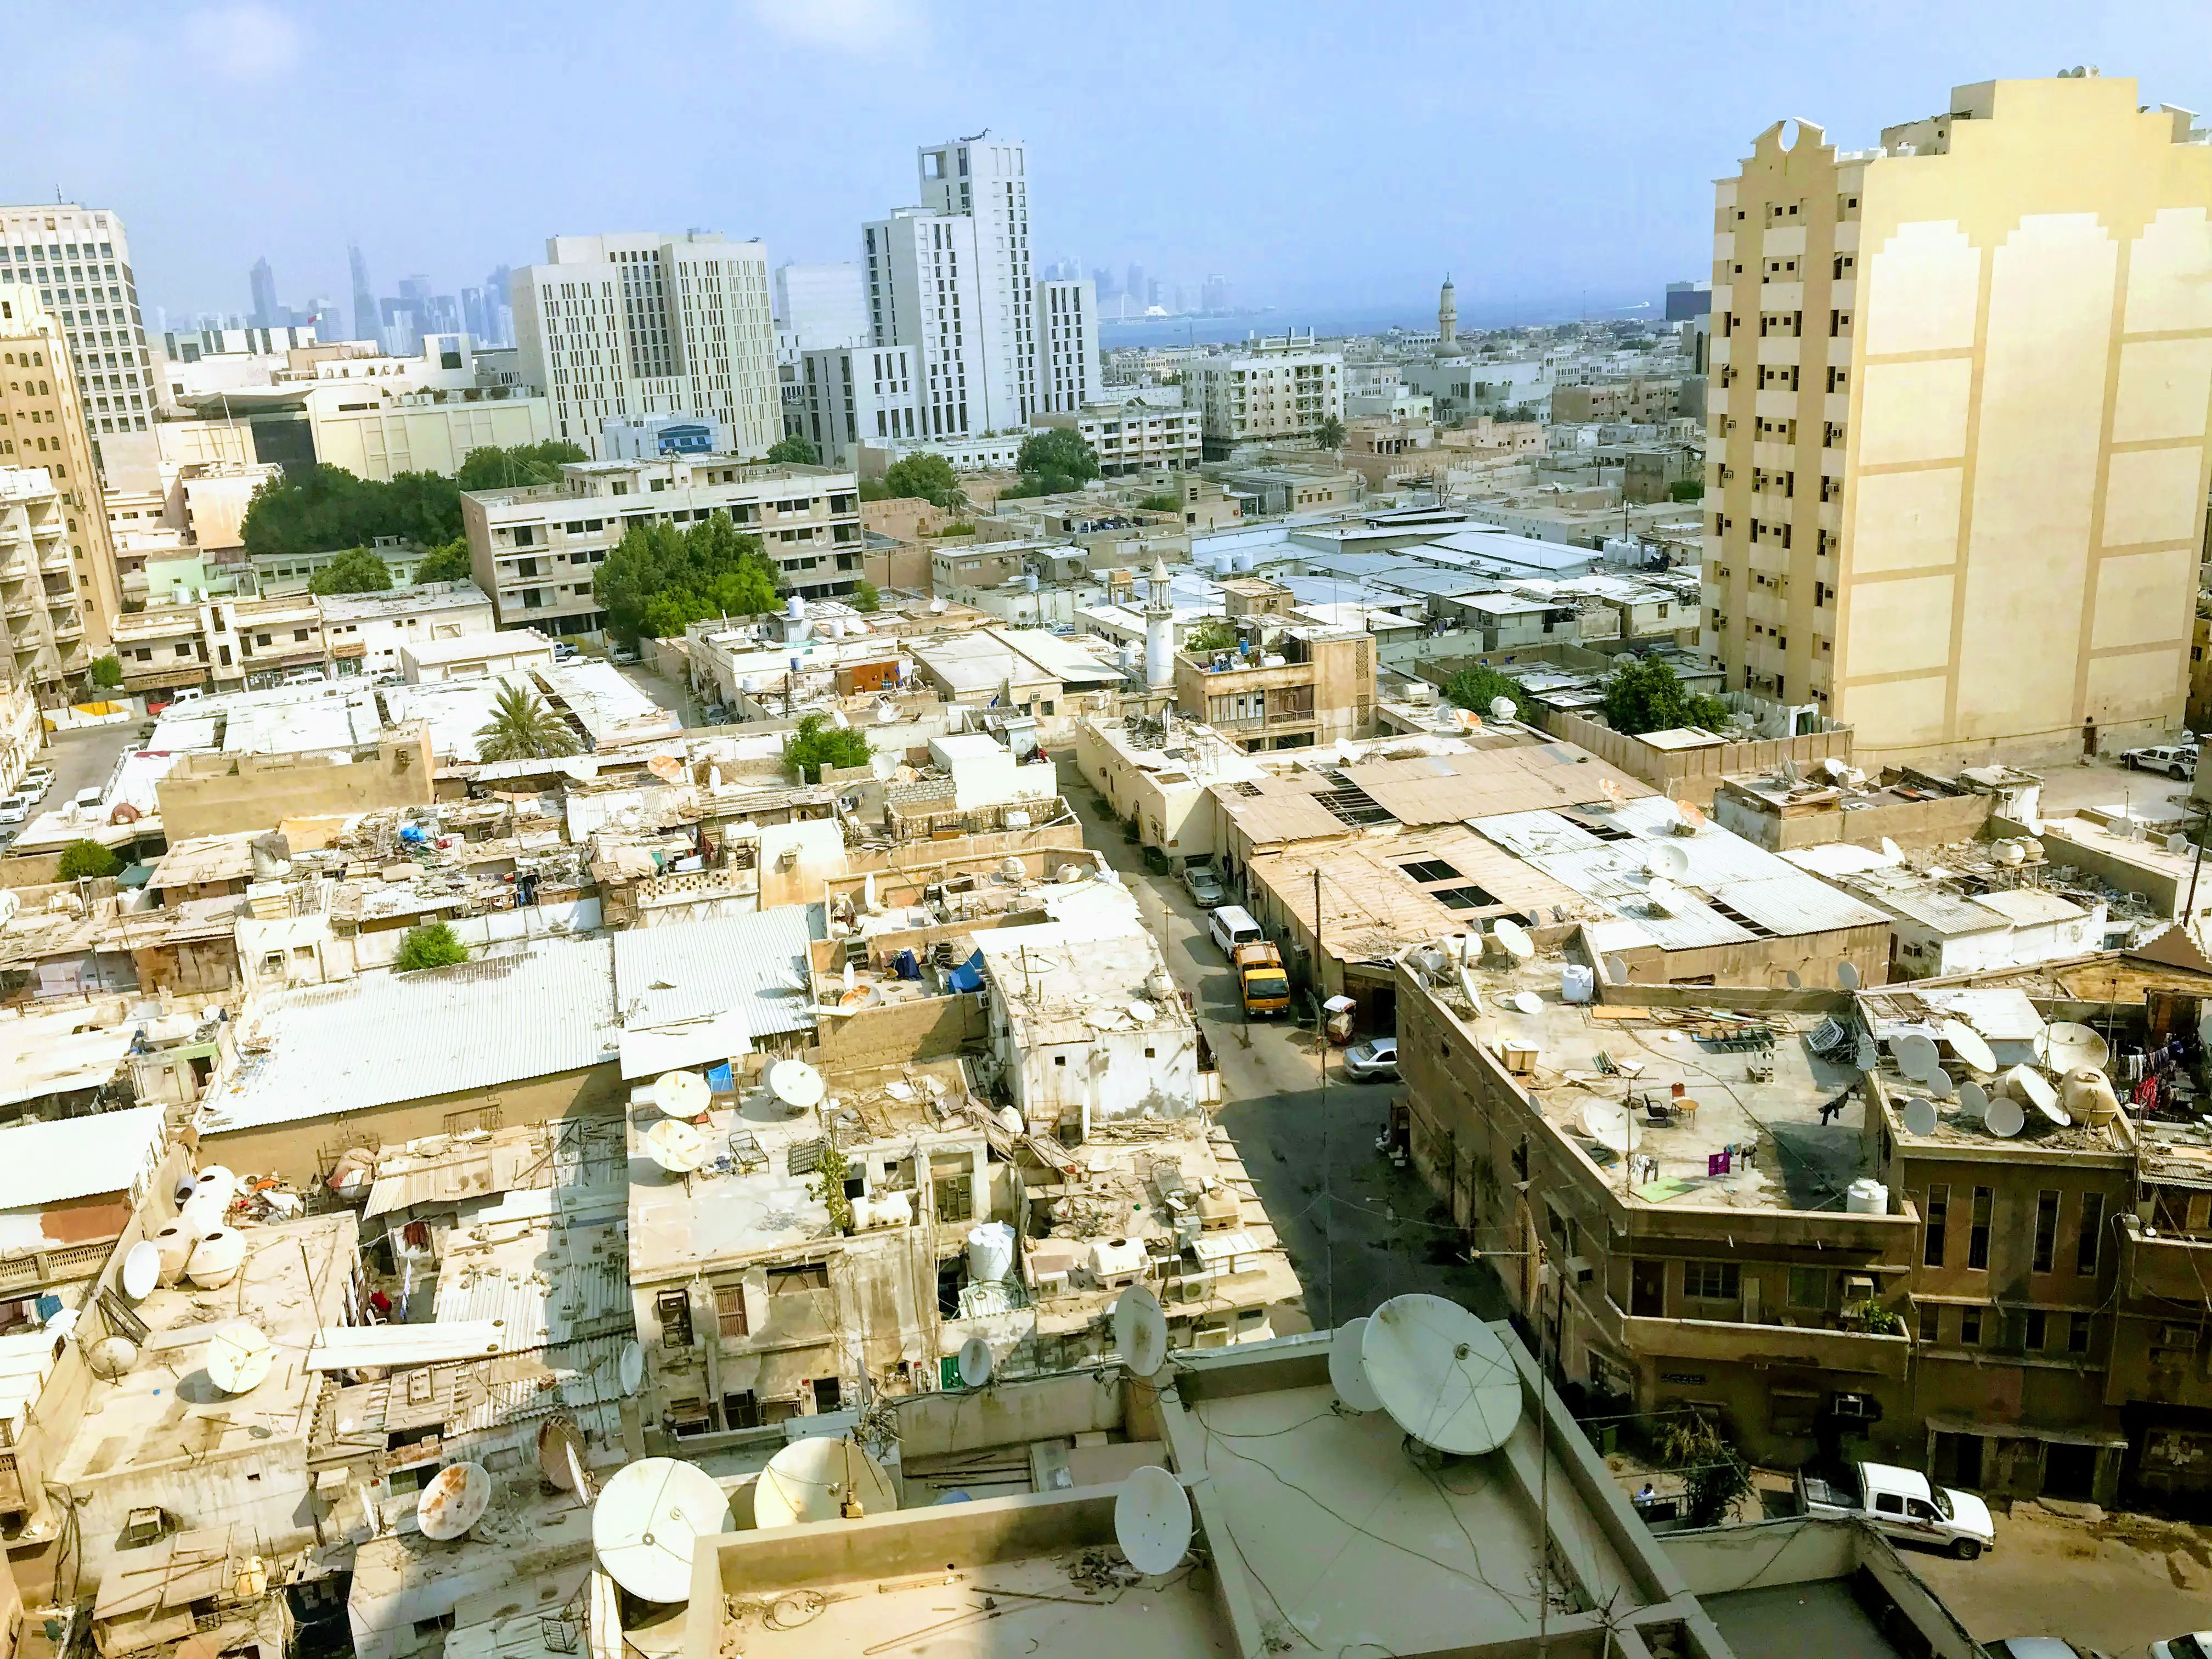 The rooftops of Doha, Qatar